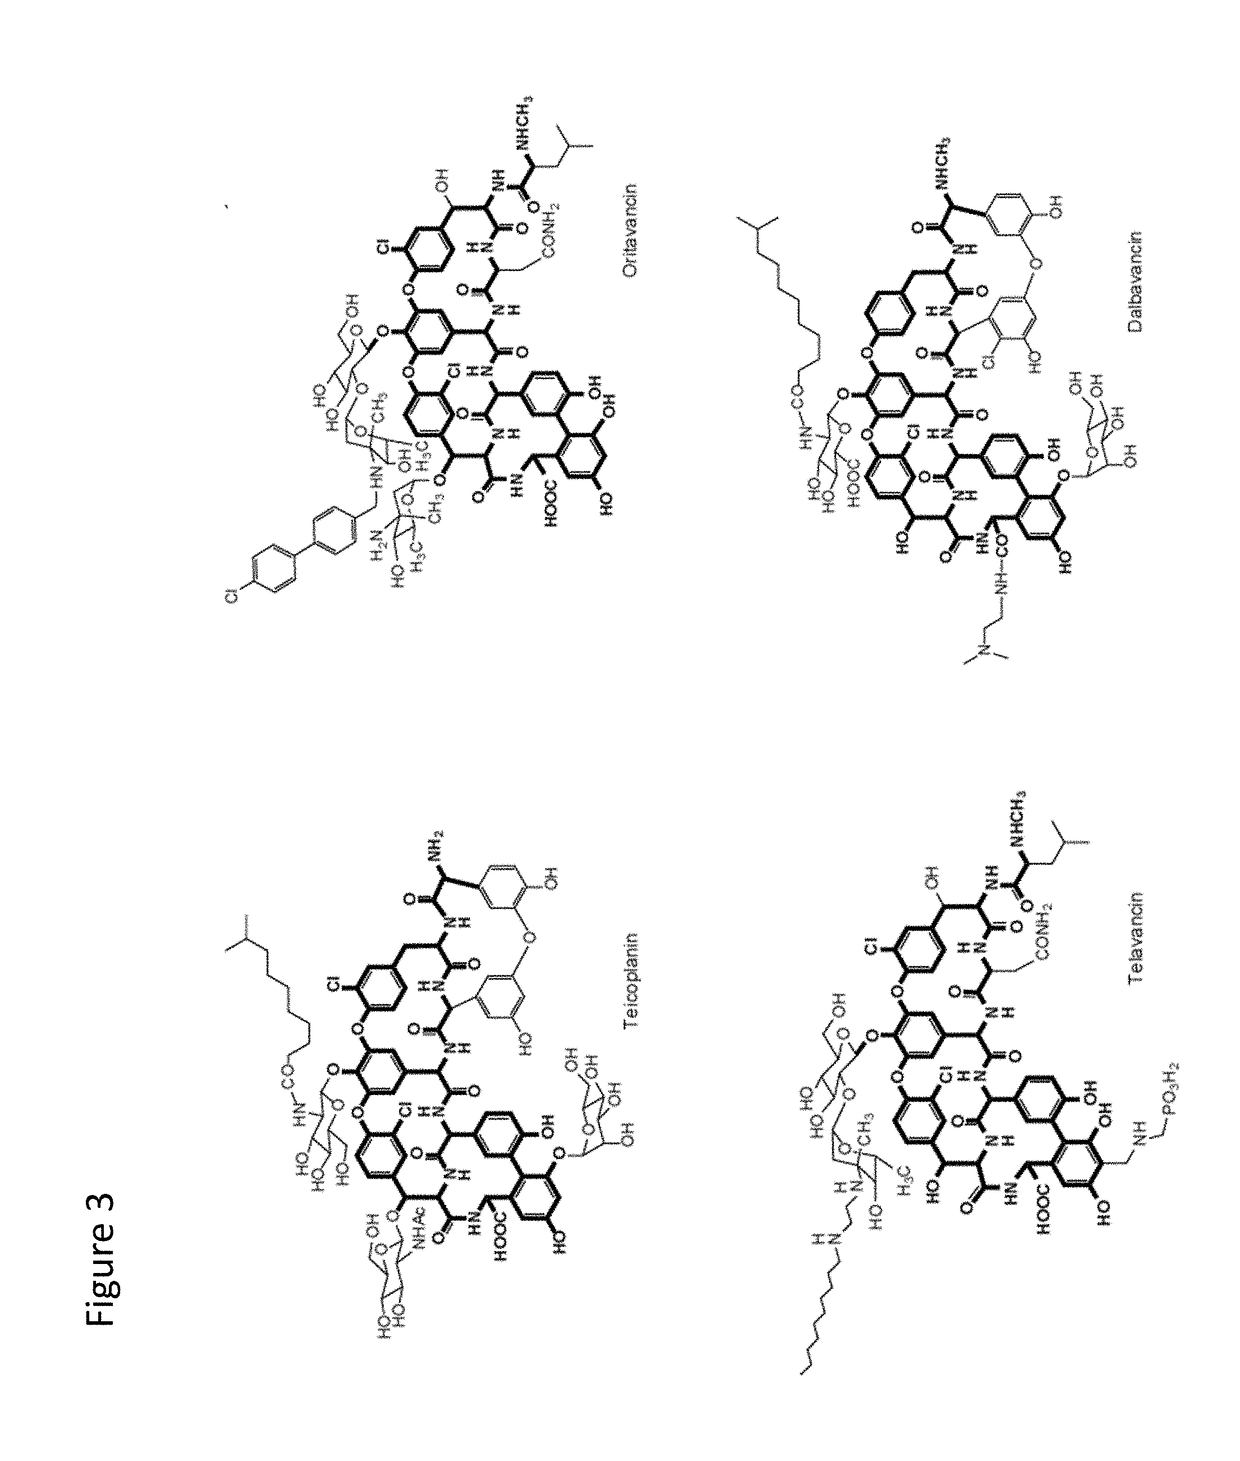 Stabilized vancomycin formulations